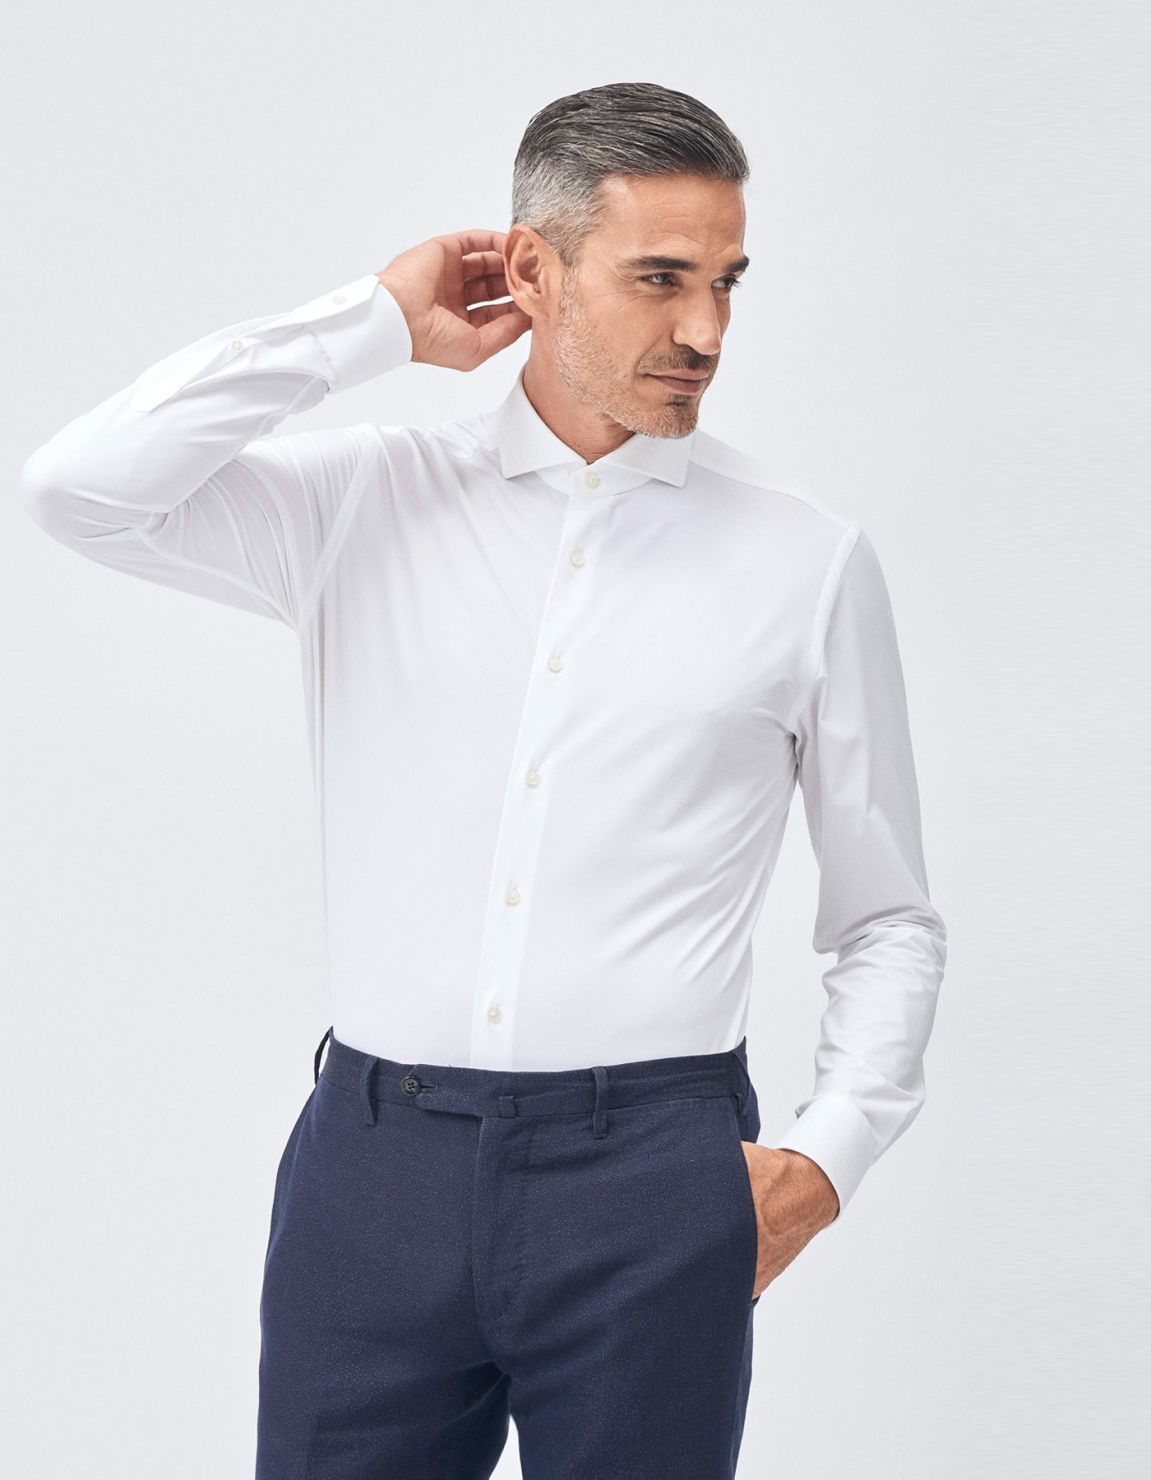 Shirt Collar cutaway White Twill Tailor Custom Fit 6